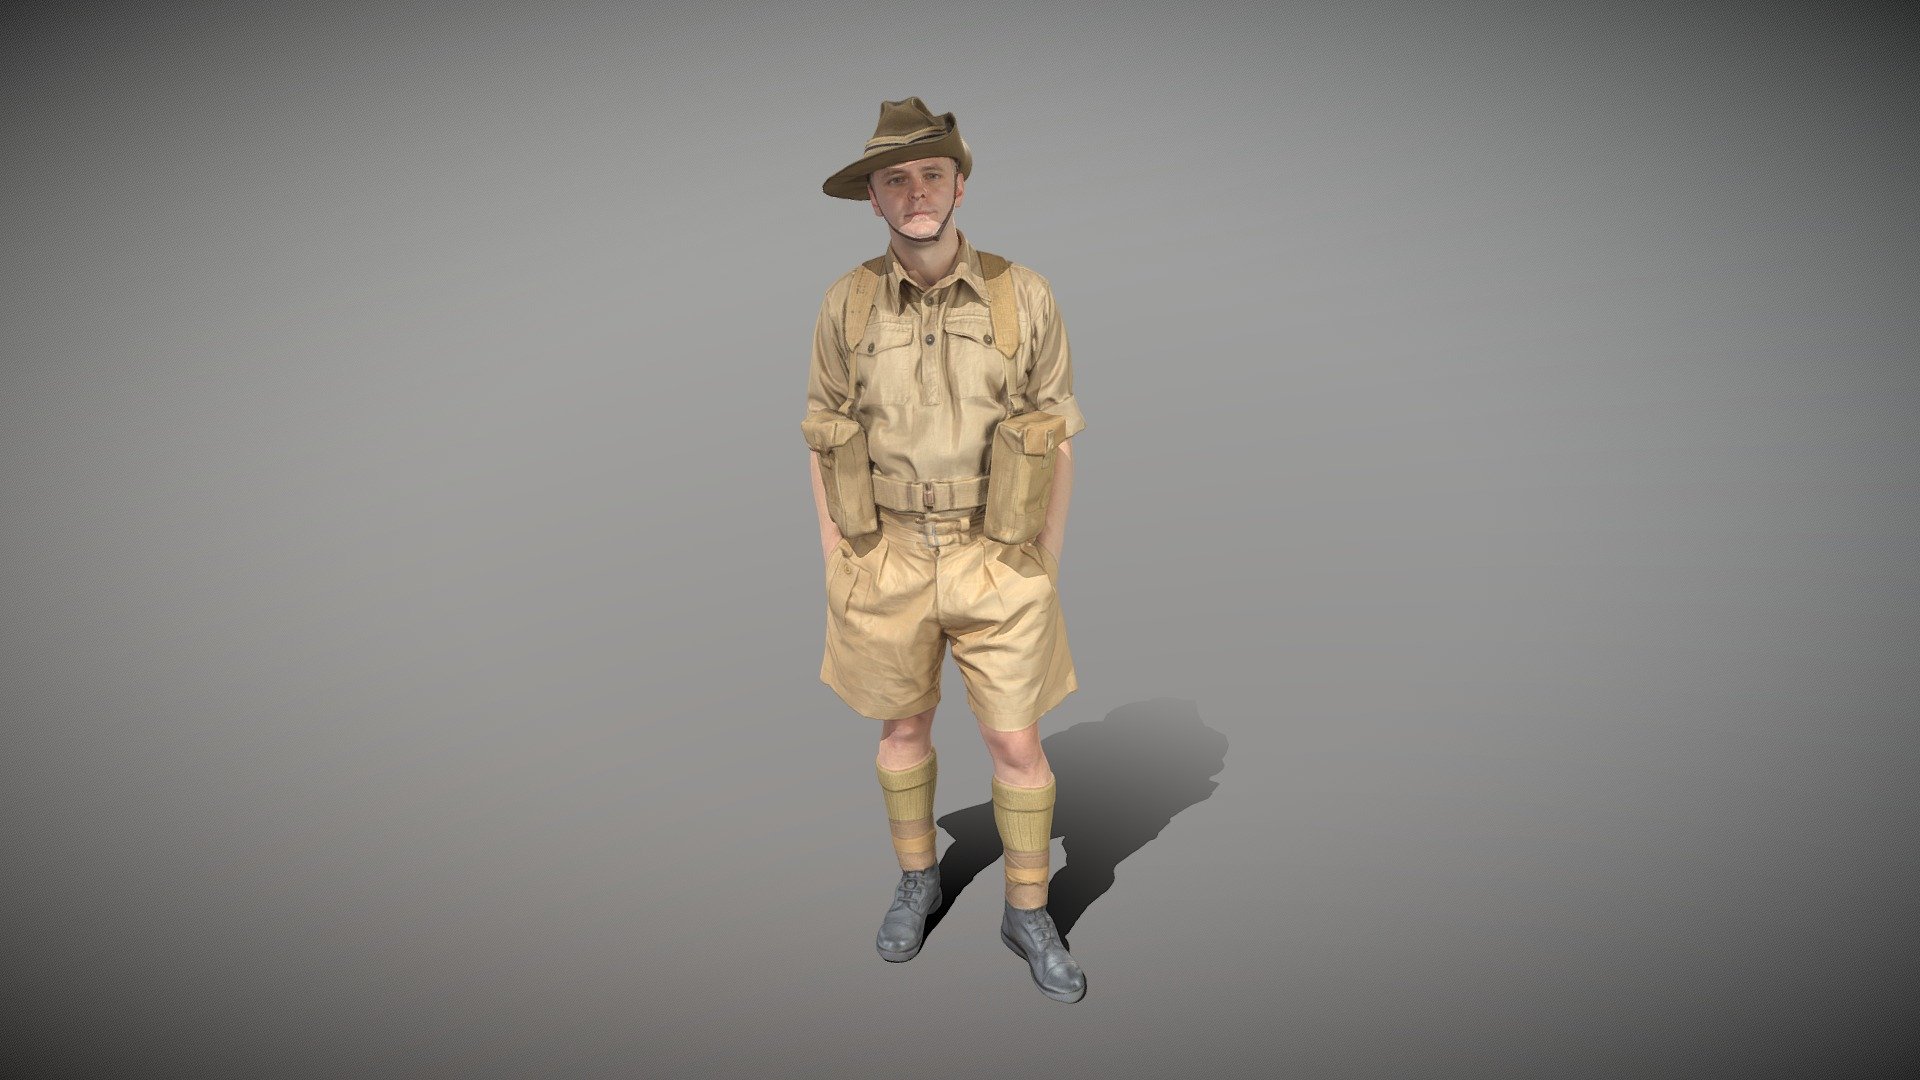 Australian infantryman from World War 2 47